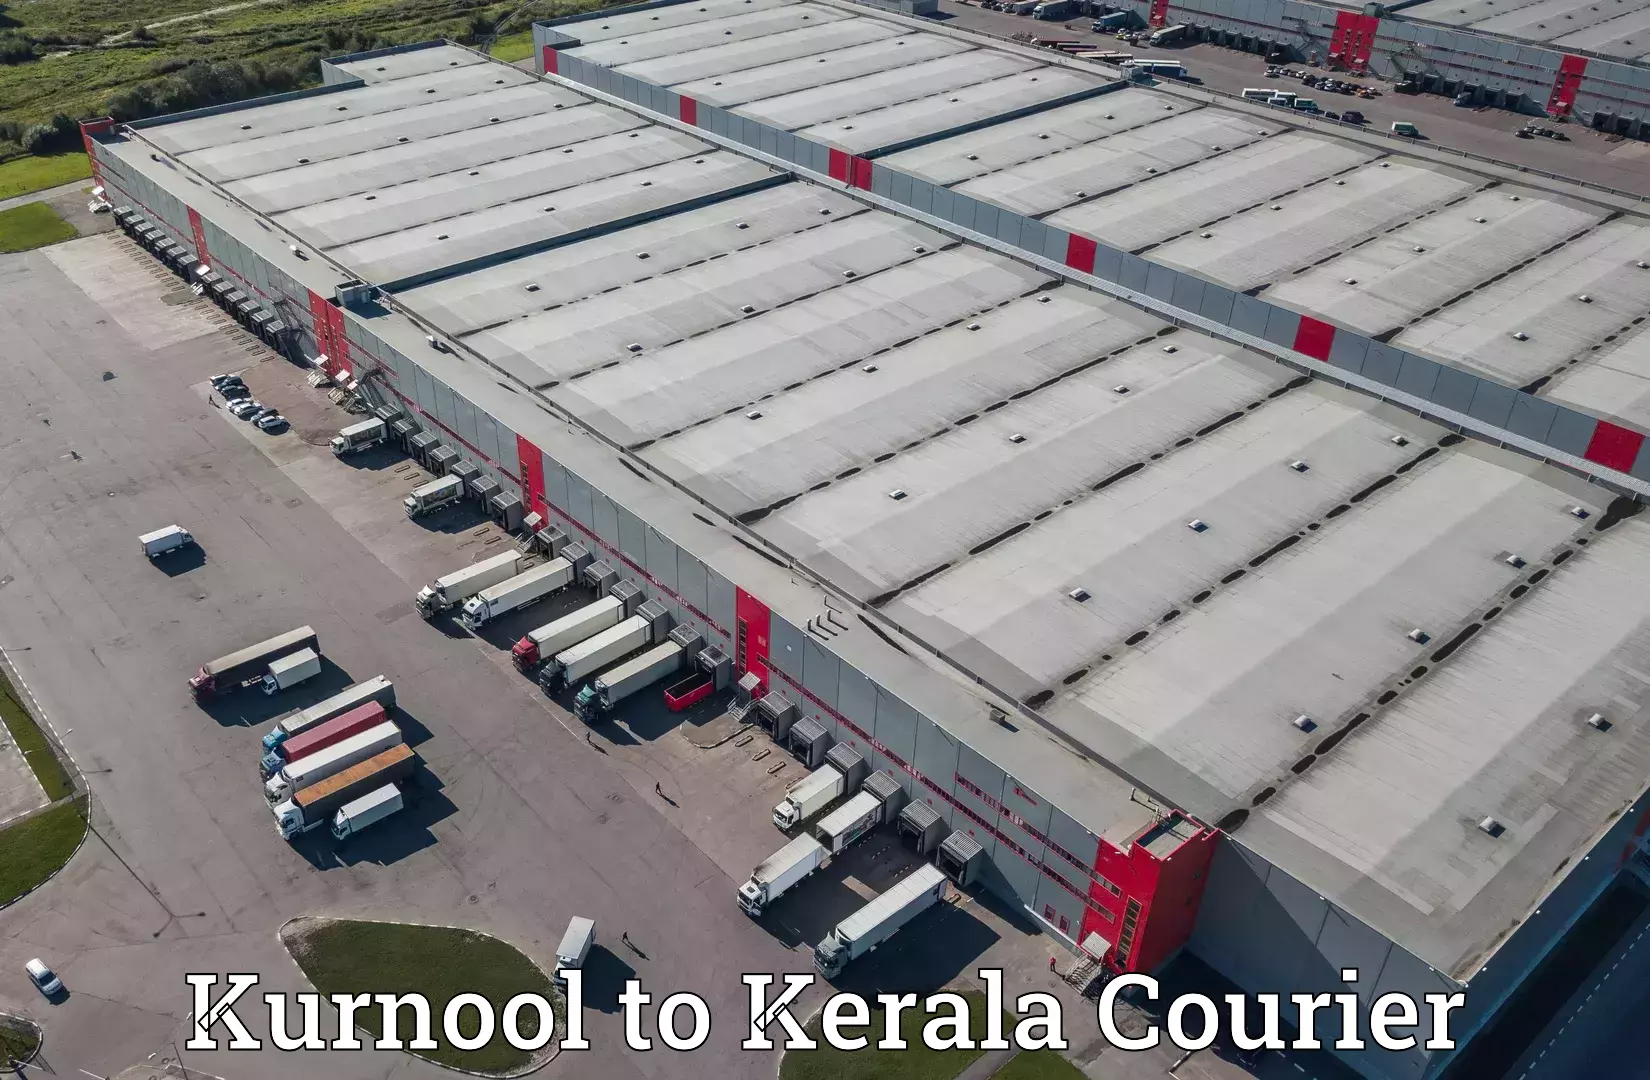 Courier service partnerships in Kurnool to Haripad